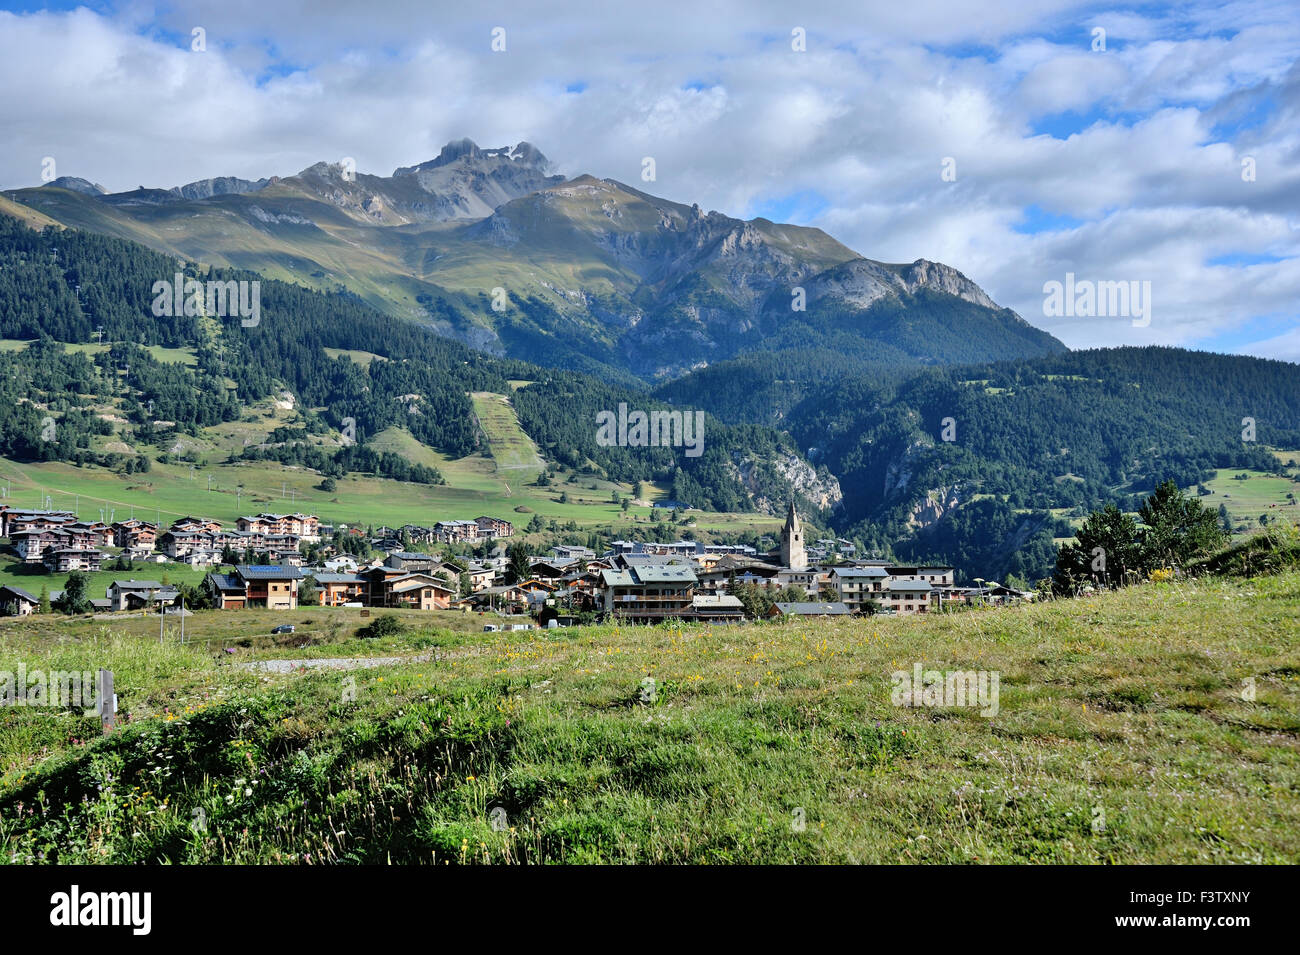 Aussois, villaggio delle Alpi Francesi, incorporato nel paesaggio, sulle Alpi francesi, Francia Foto Stock